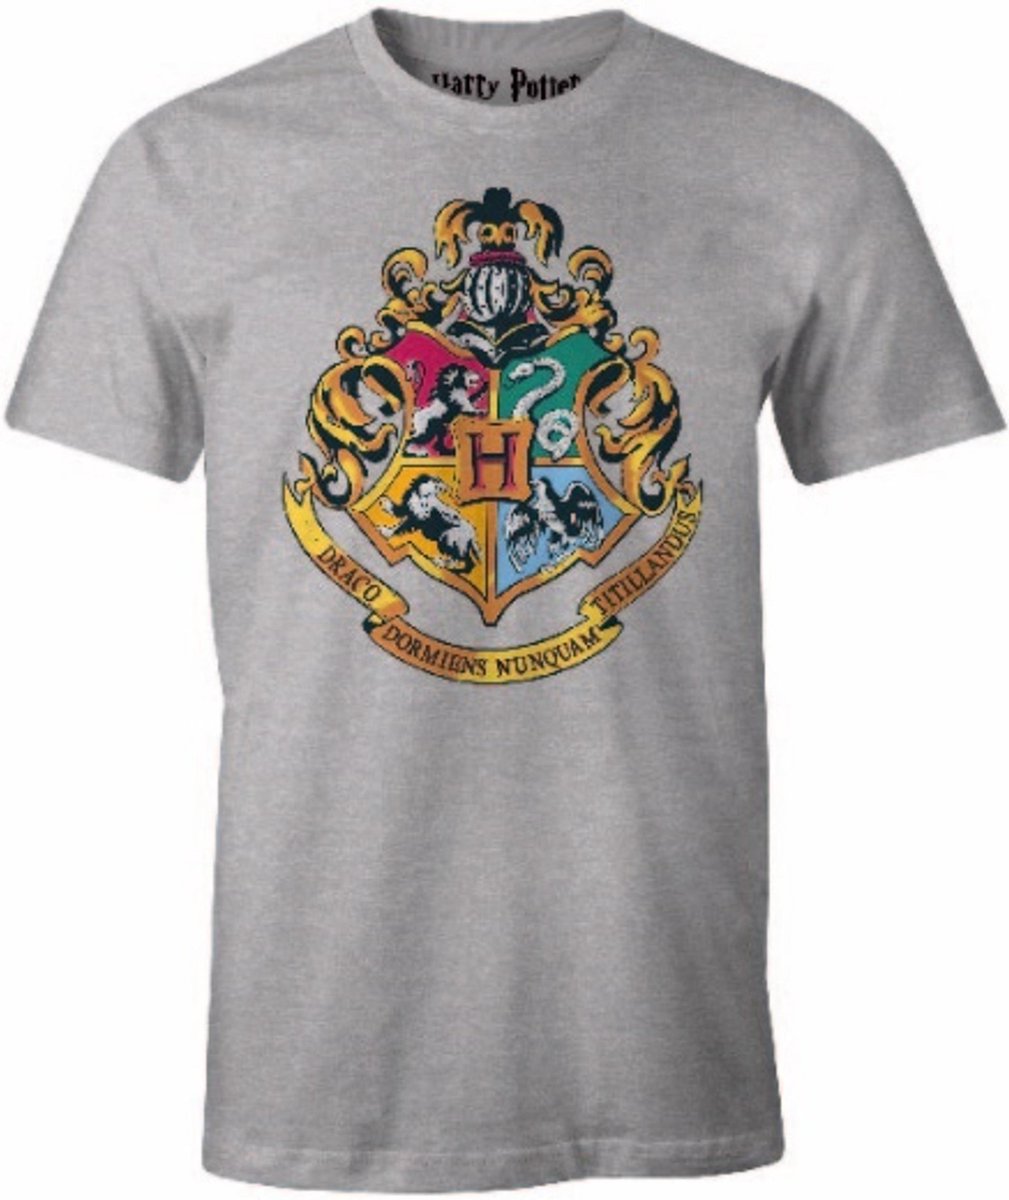 Harry Potter - Hogwarts Houses Grey Melange T-Shirt - XL